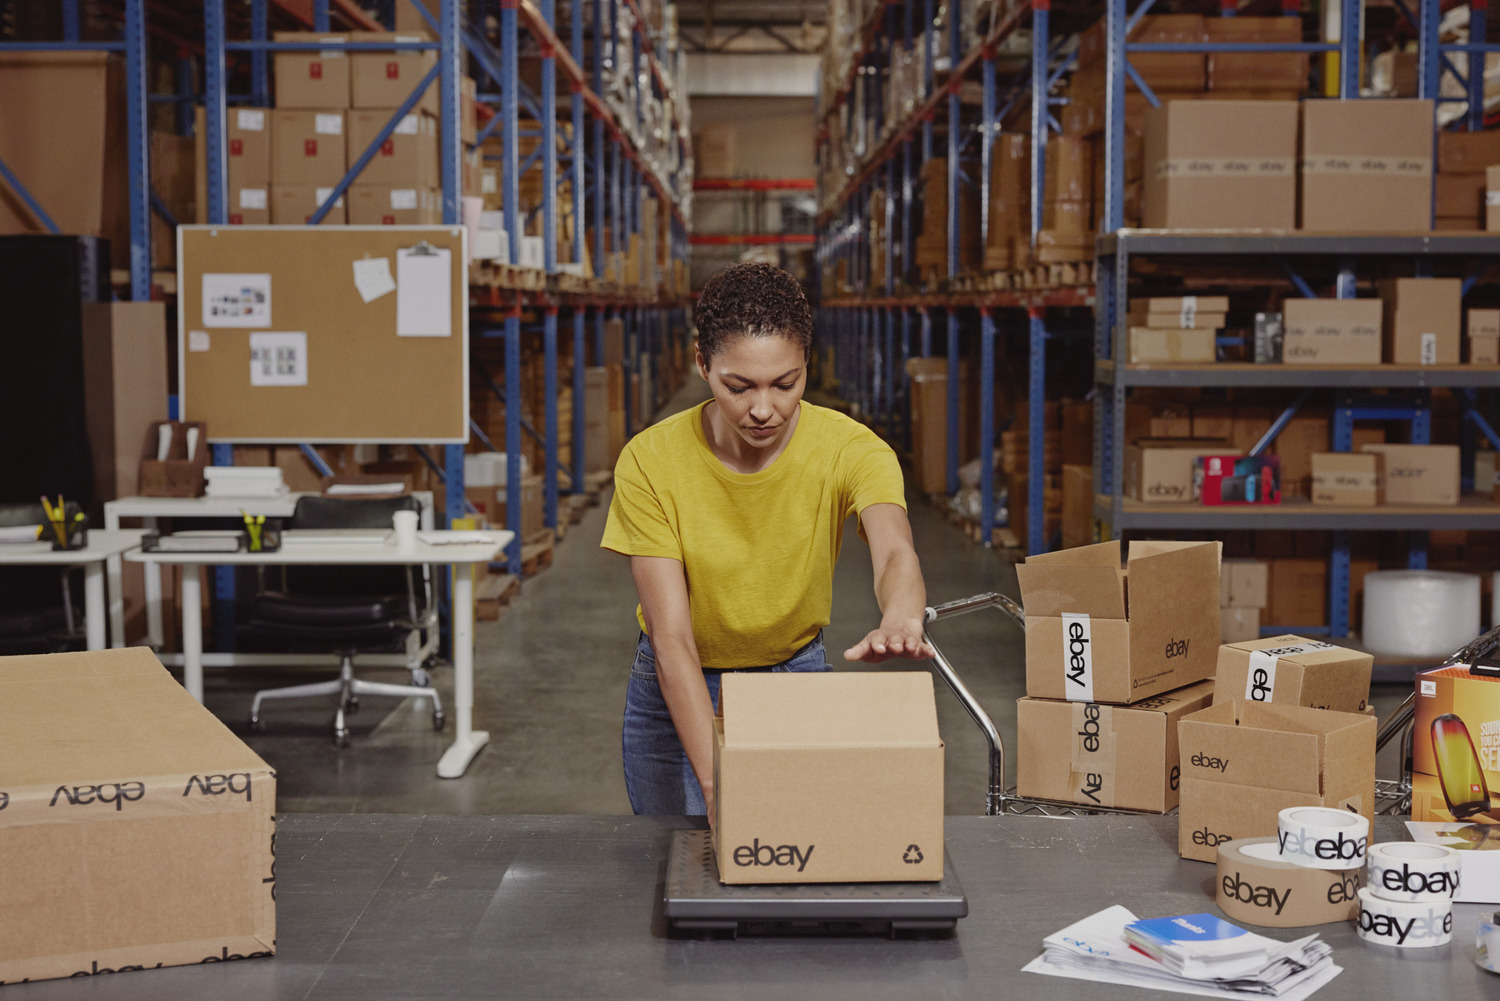 woman wearing yellow shirt packing boxes in warehouse